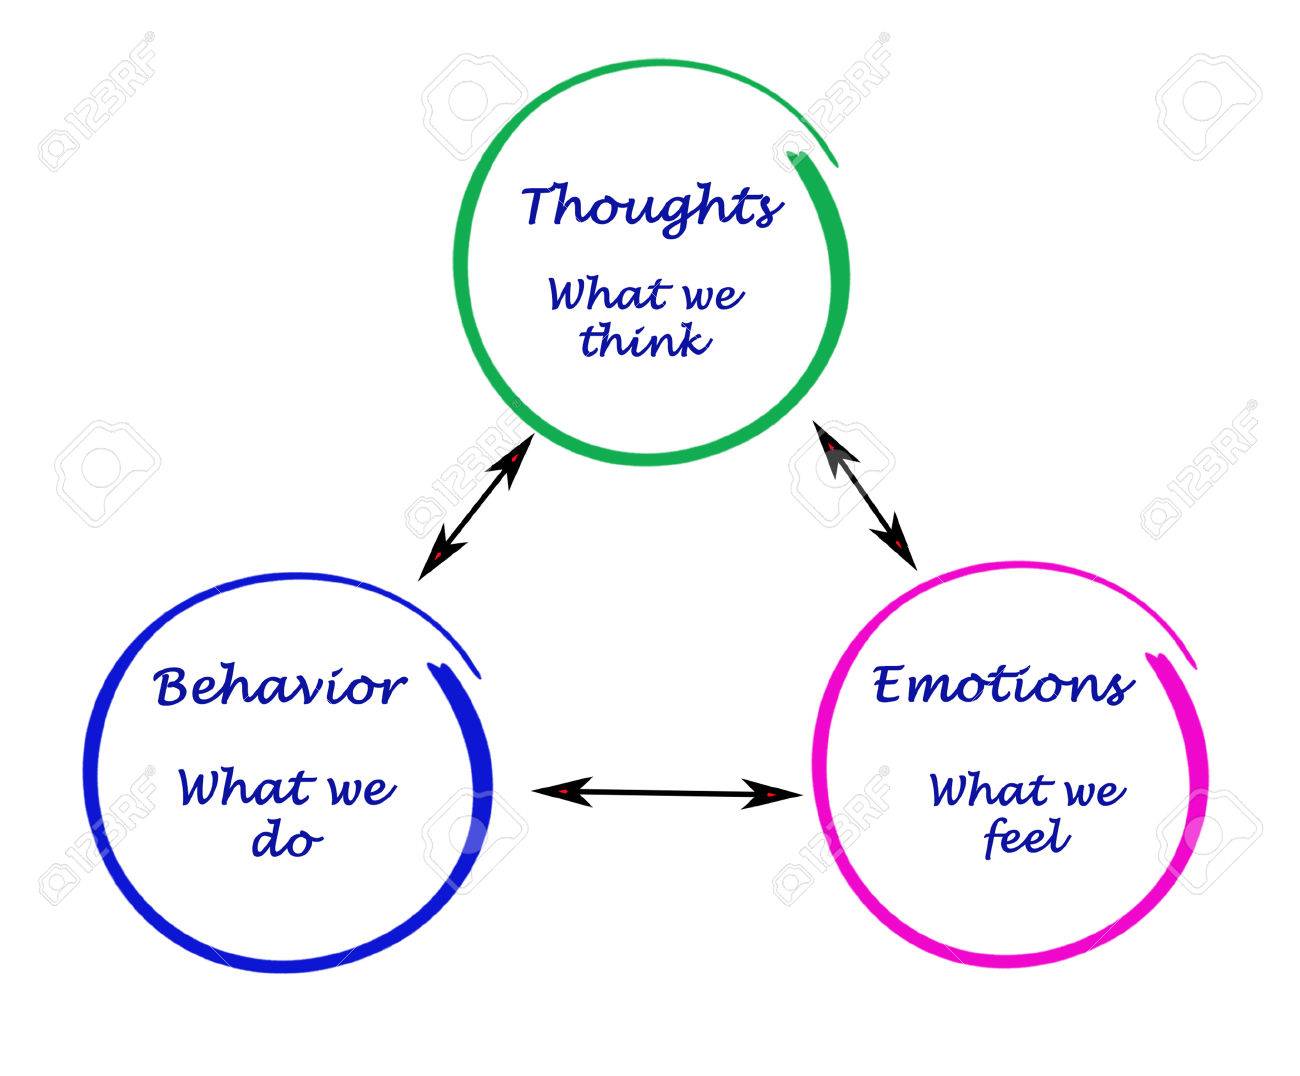 37032568-relationship-between-cognition-emotions-and-behavior.jpg